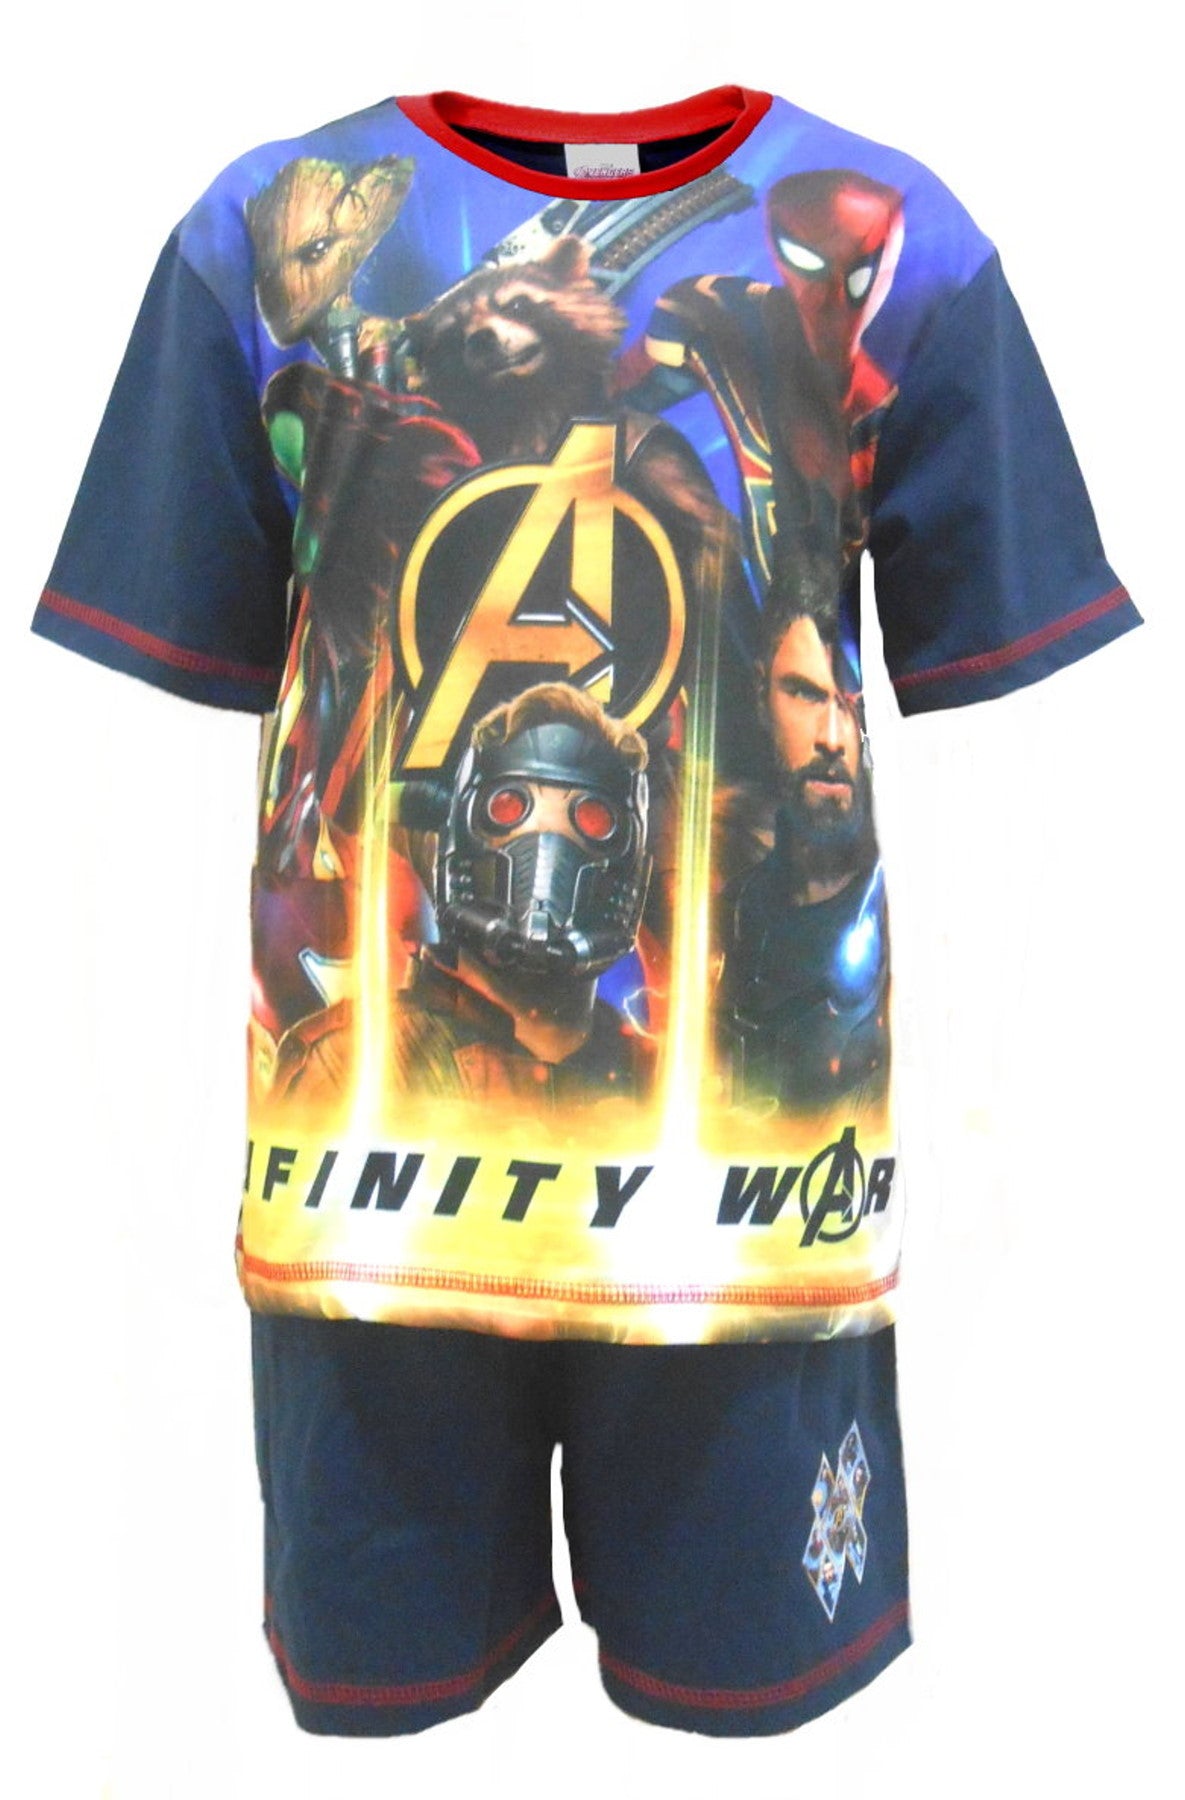 Marvel Avengers Infinifty War "A" Boys Shortie Pyjamas